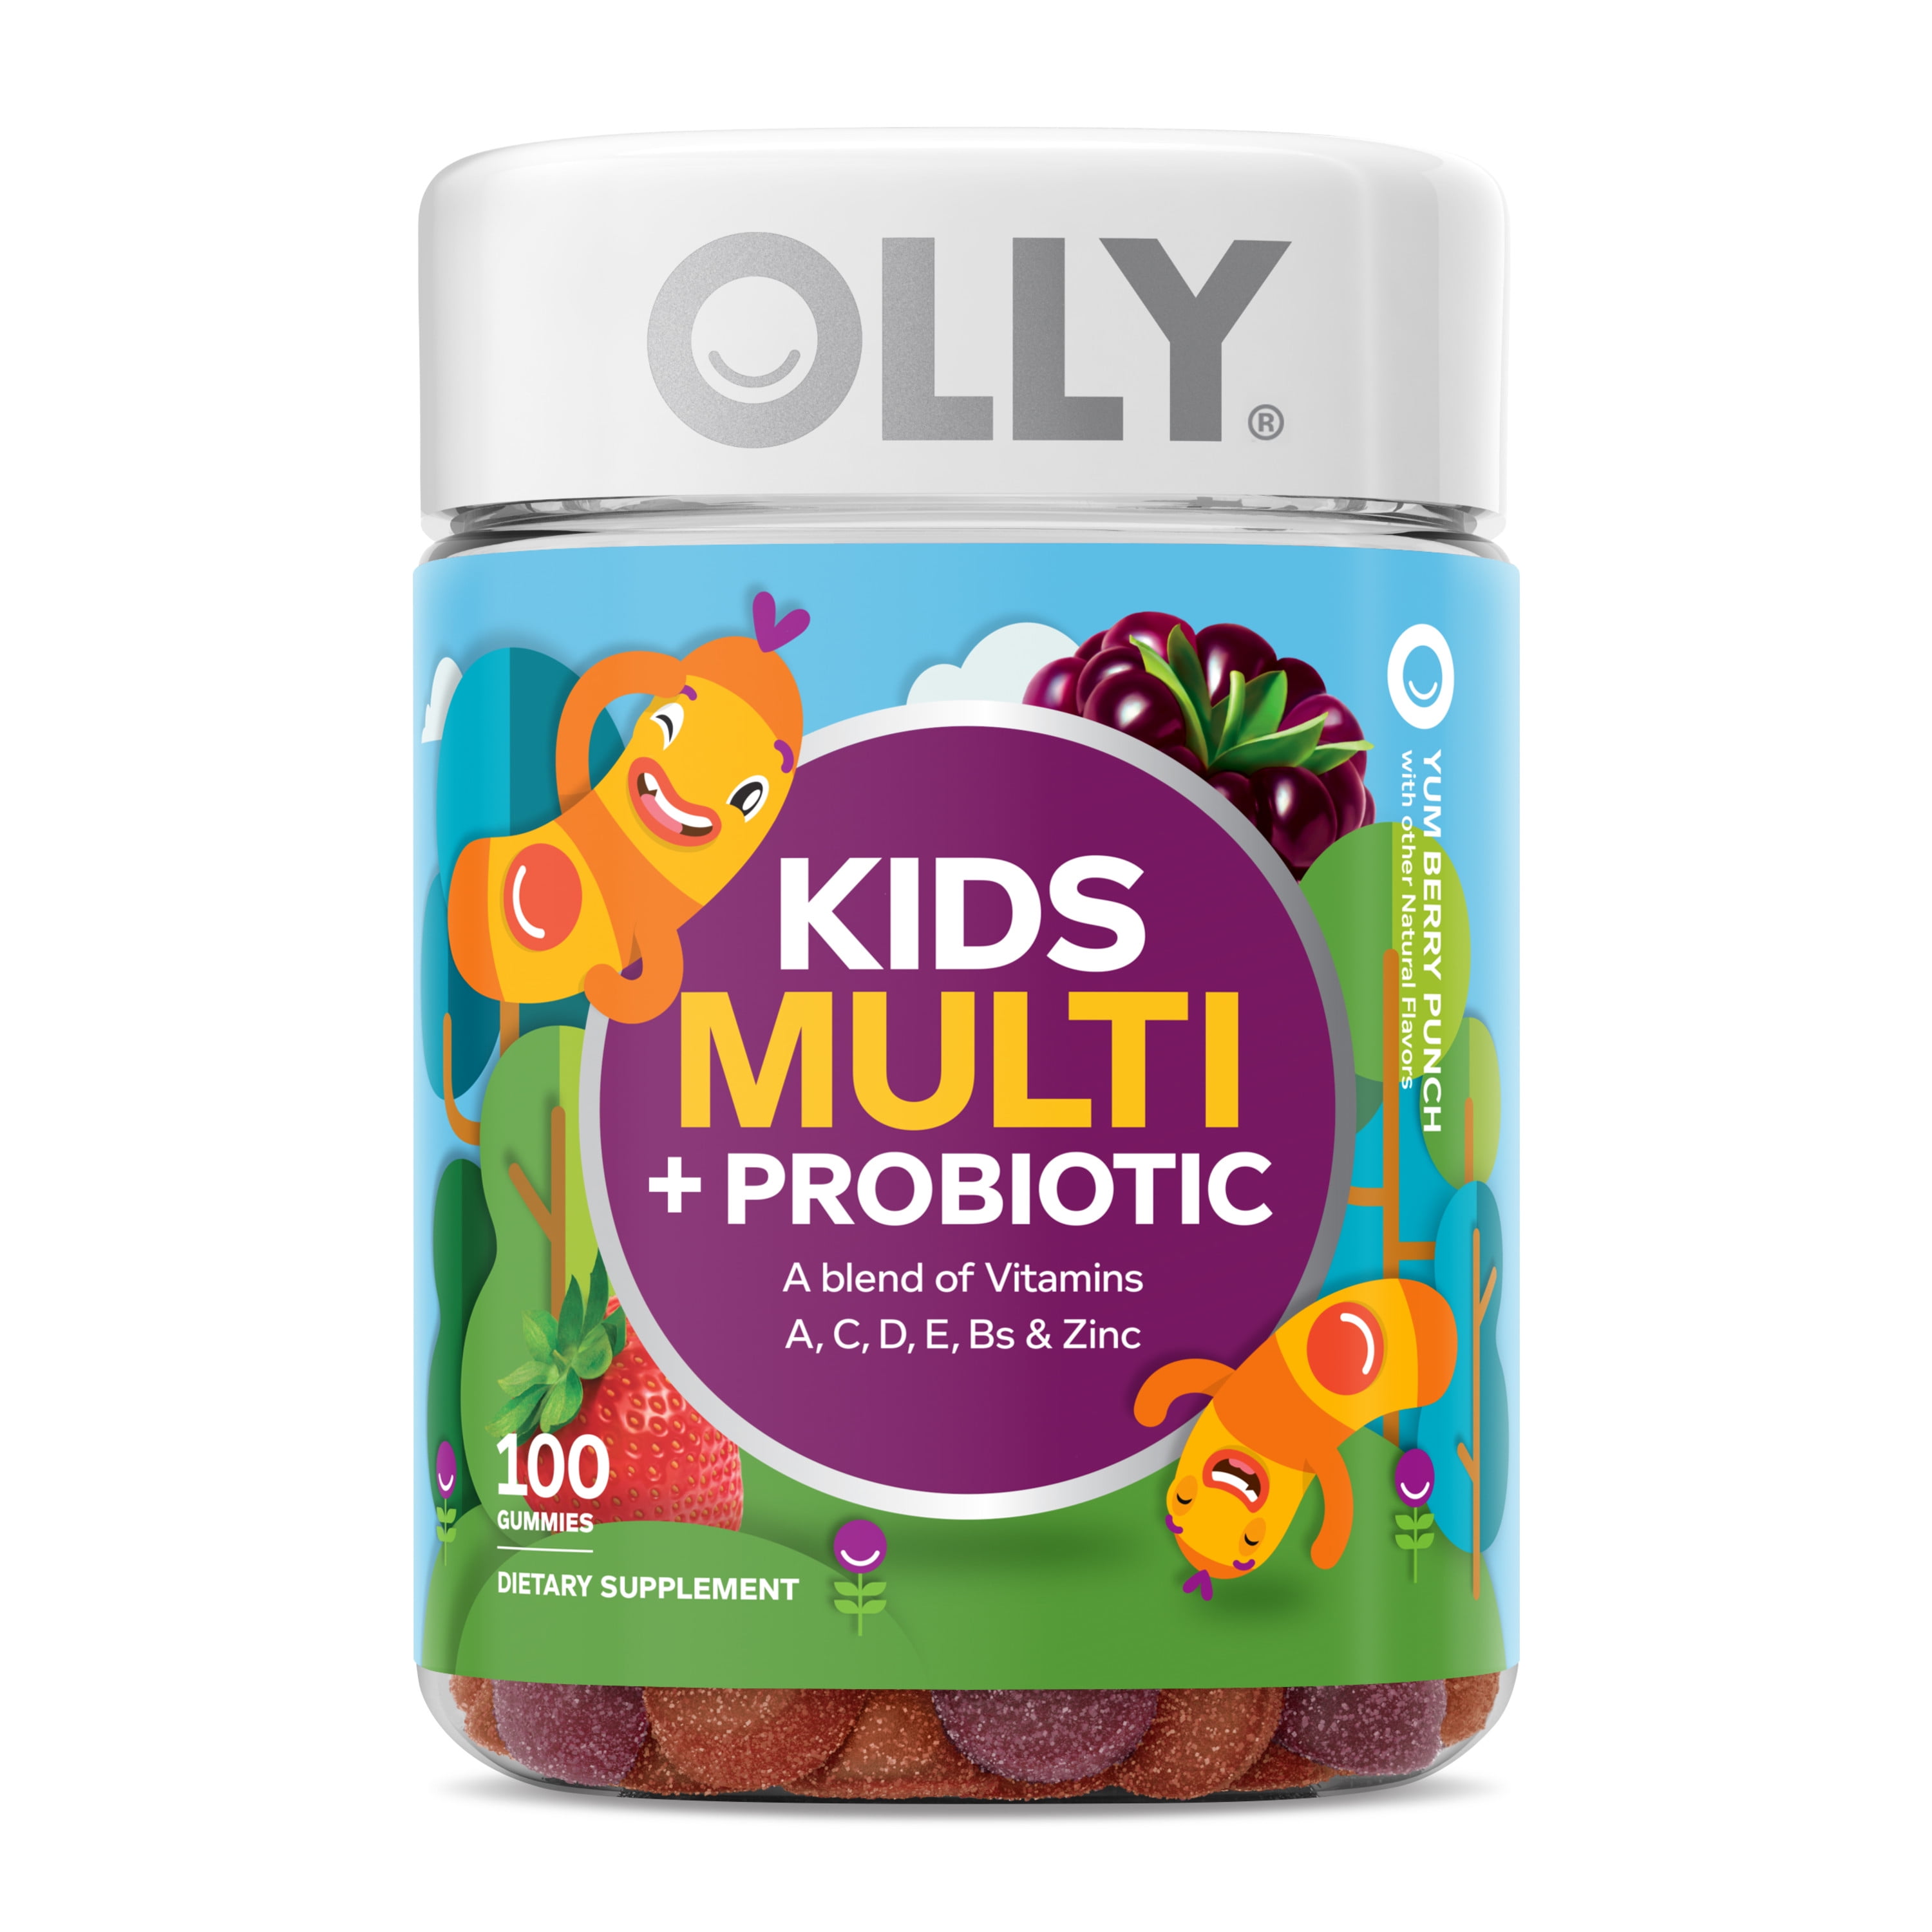 OLLY Kids Multivitamin + Probiotic Gummy, Vitamin A, C, D, E, B, Zinc, 100 Ct